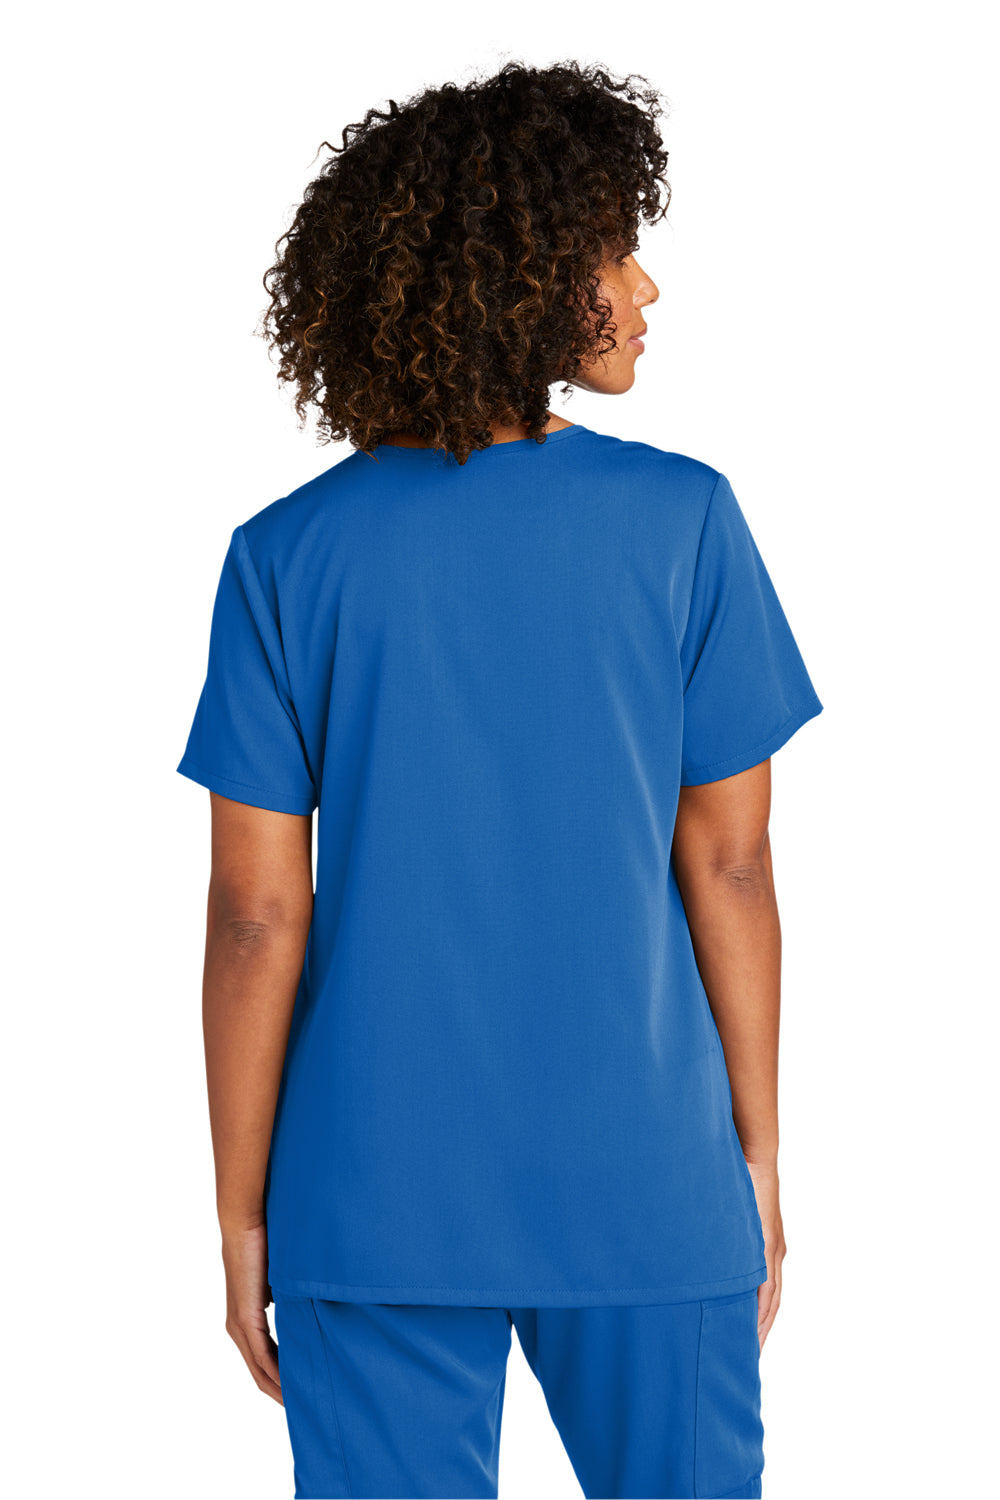 Wonderwink WW4168 Premiere Flex Short Sleeve V-Neck Shirt w/ Pockets Royal Blue Back